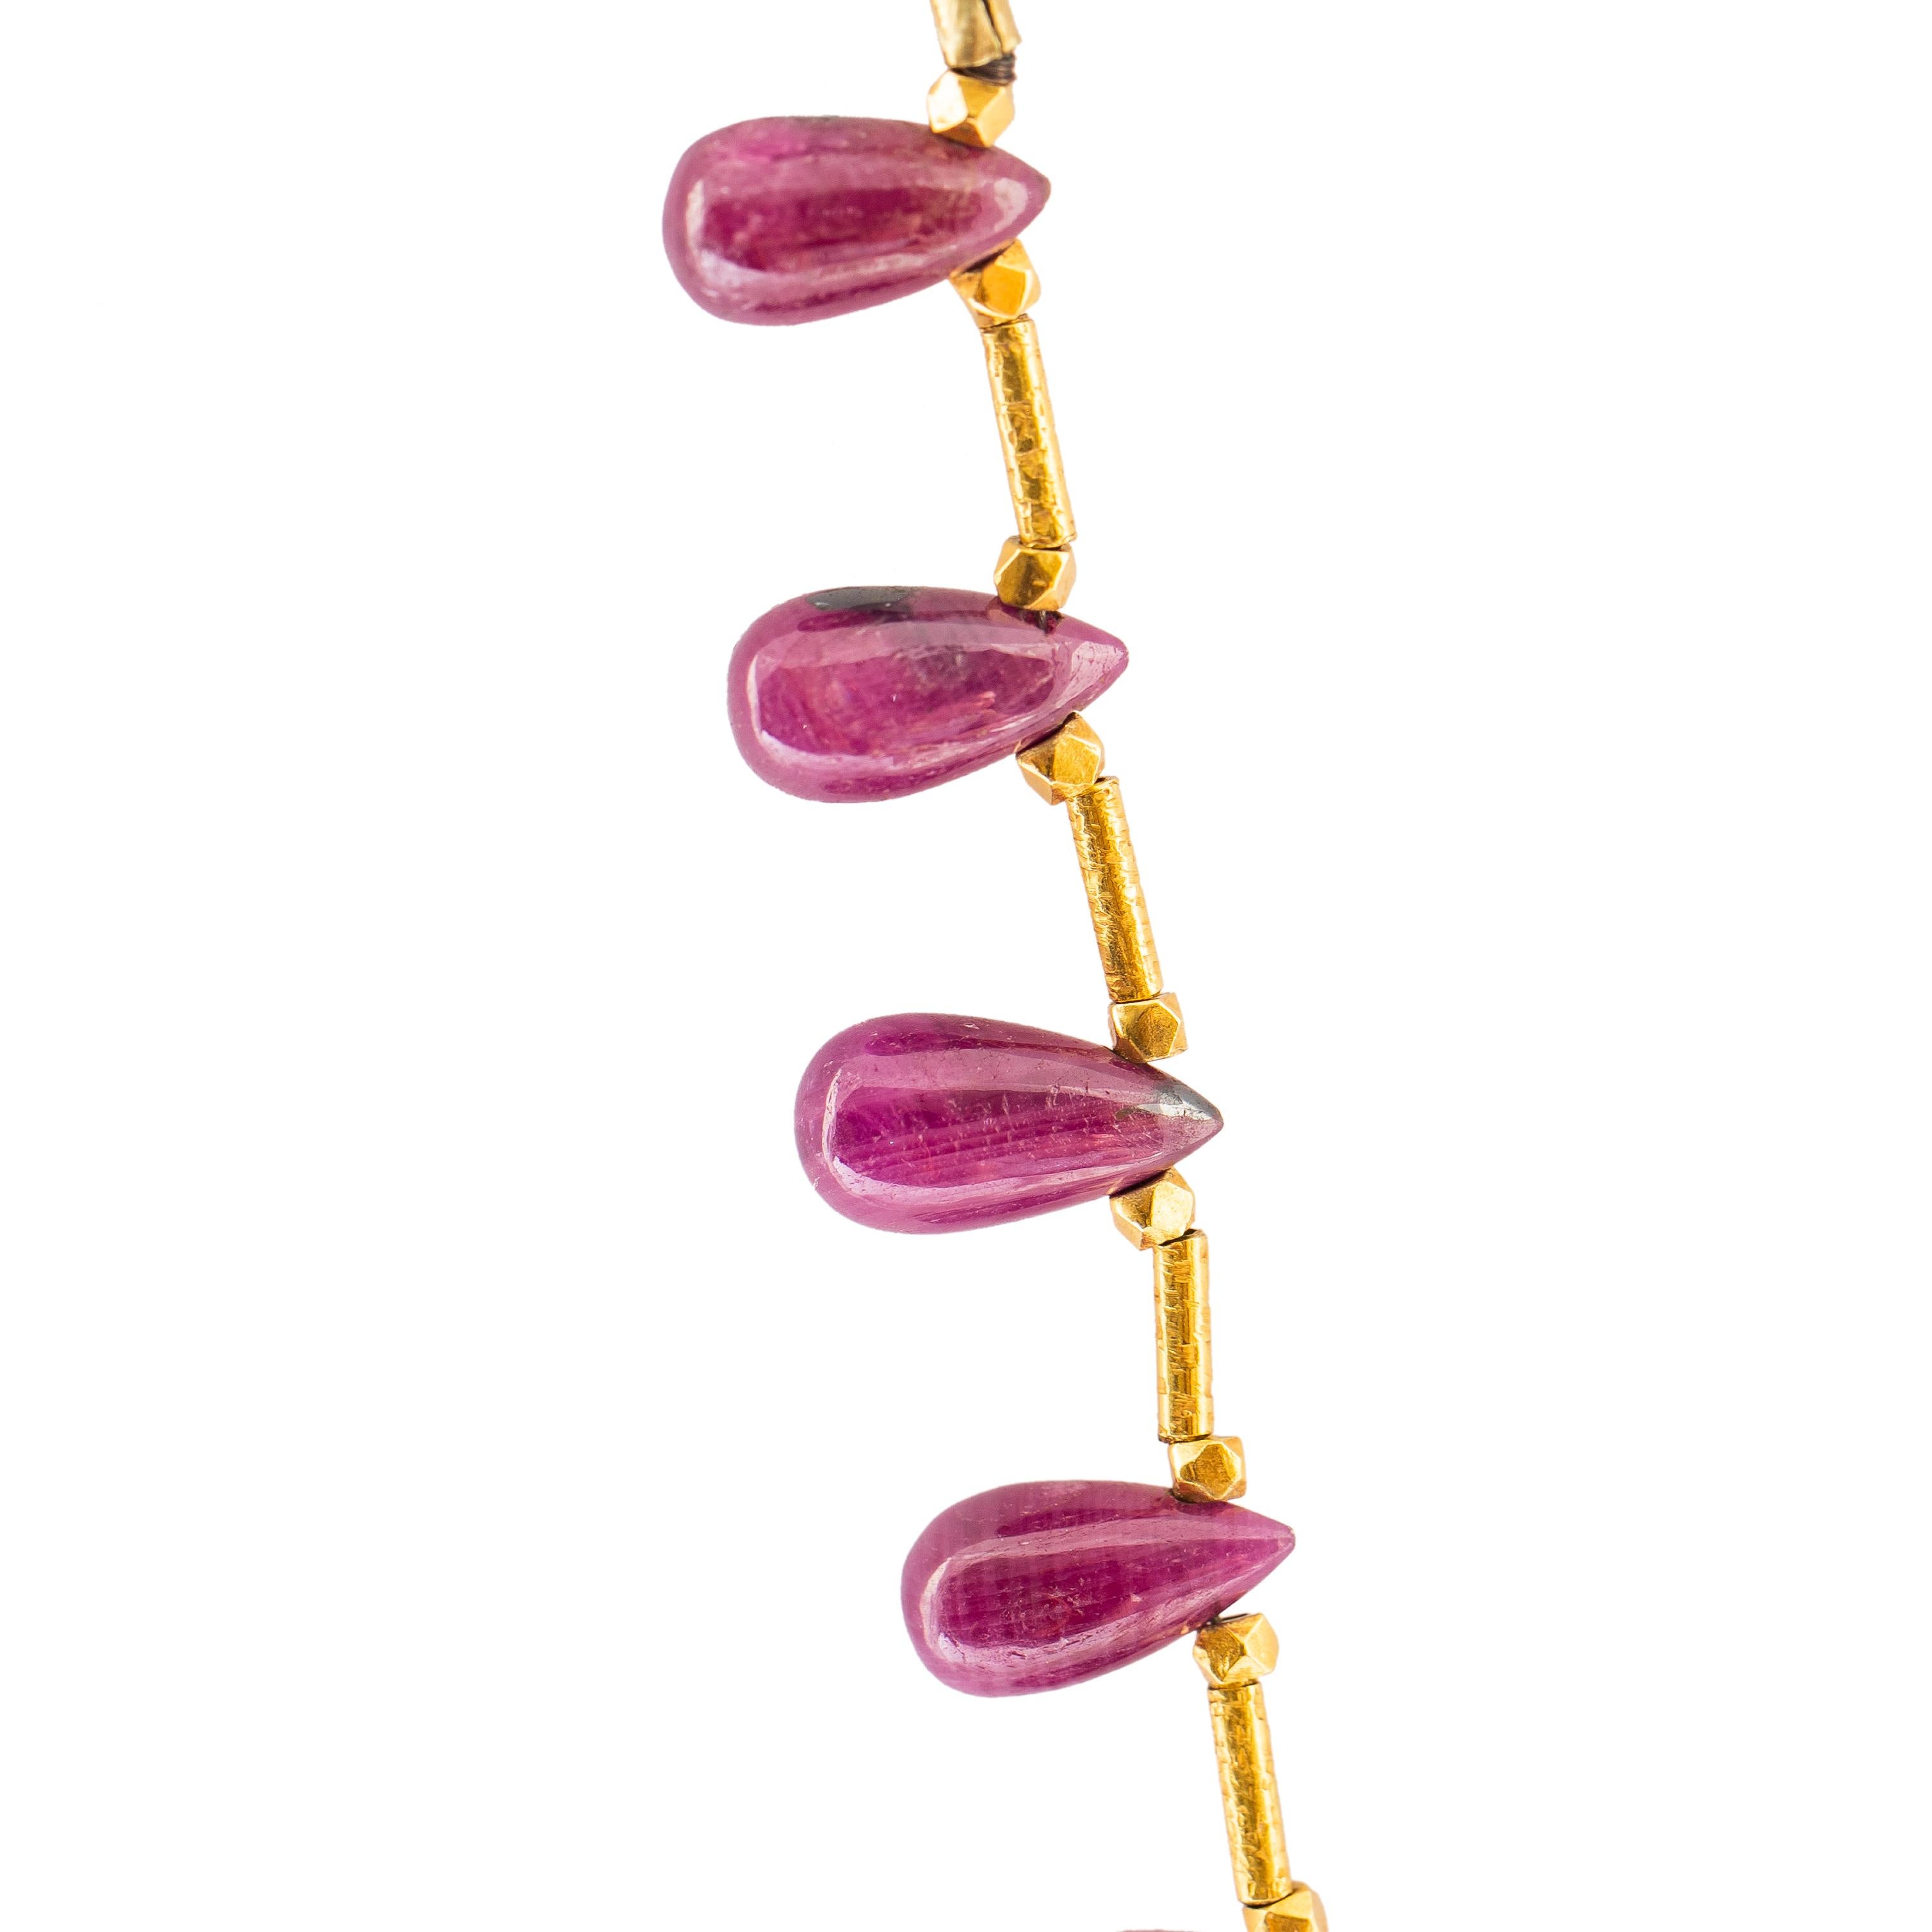 ruby drop necklace